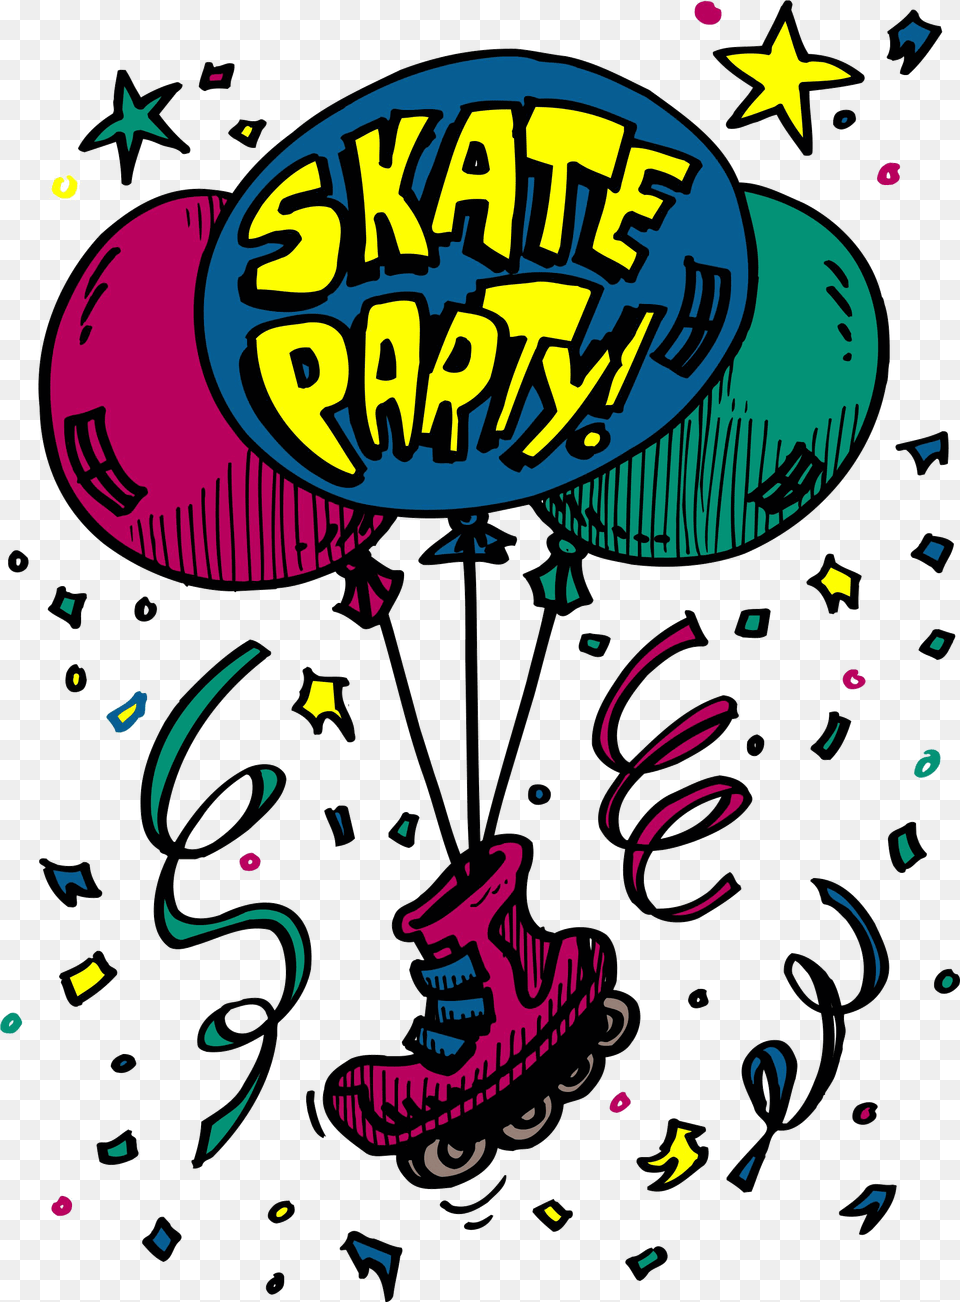 Skating Birthday Party Roller Skating Birthday Party, Paper, Confetti, Blackboard Png